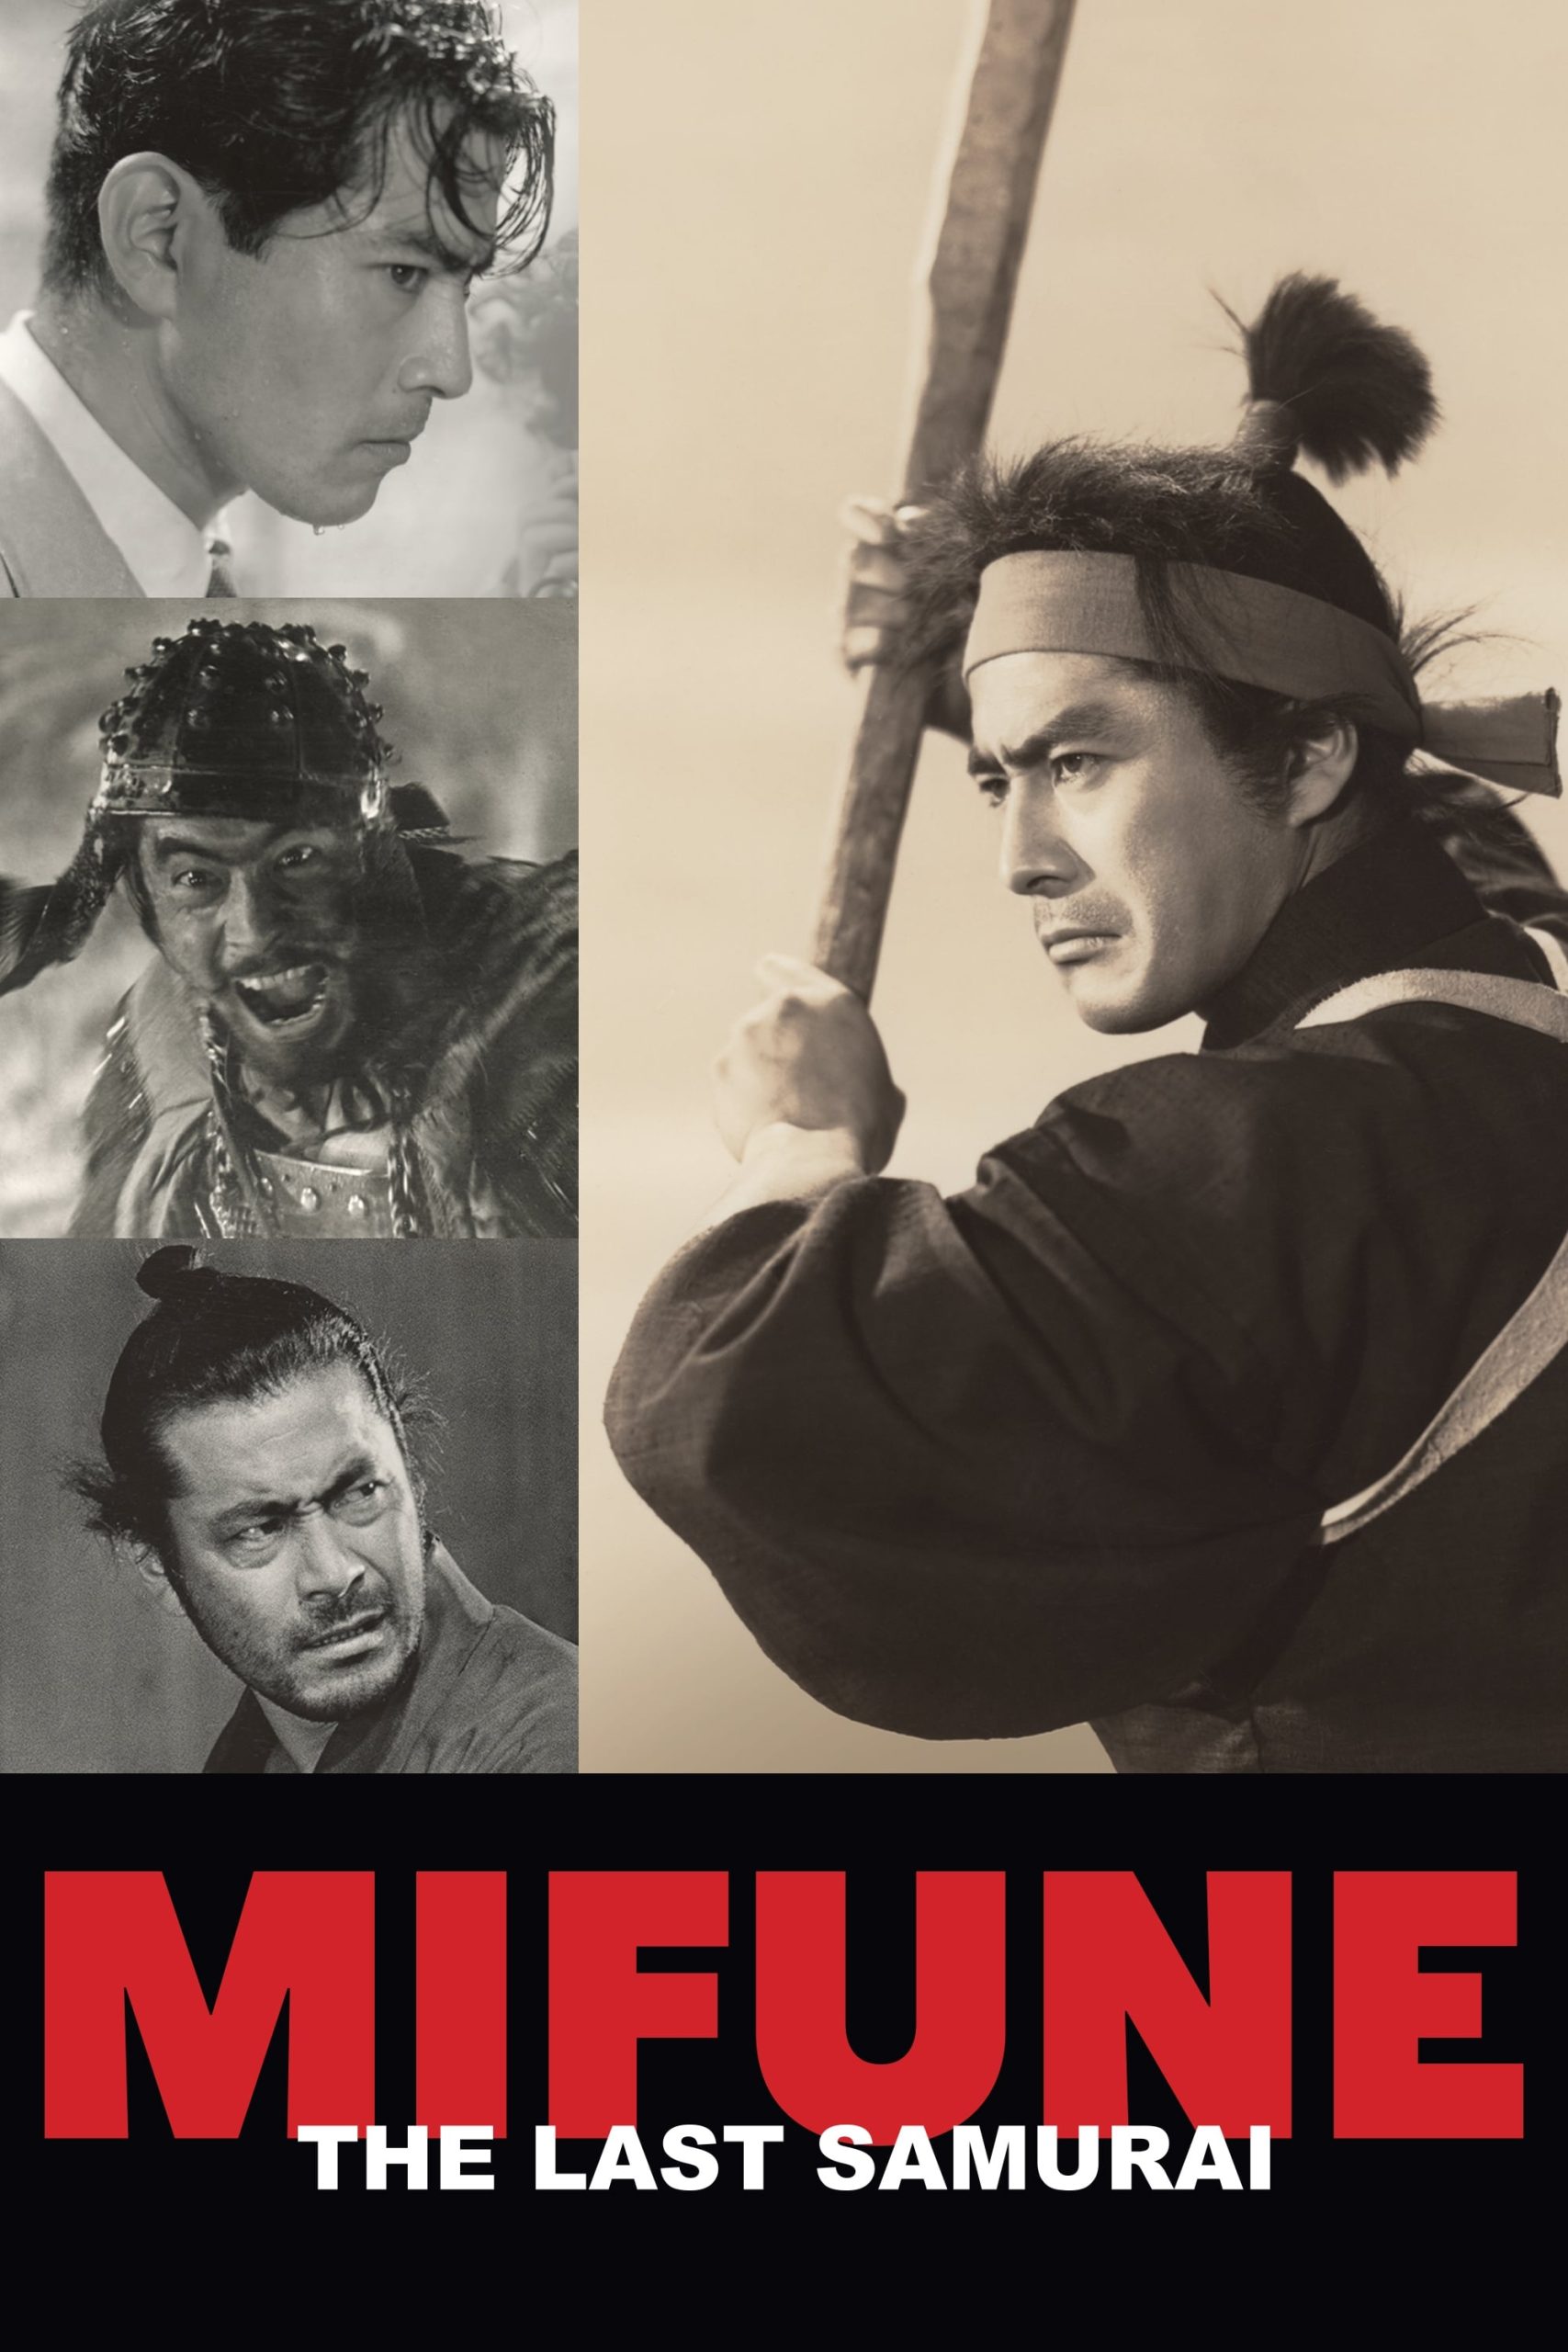 Mifune The Last Samurai (2015)